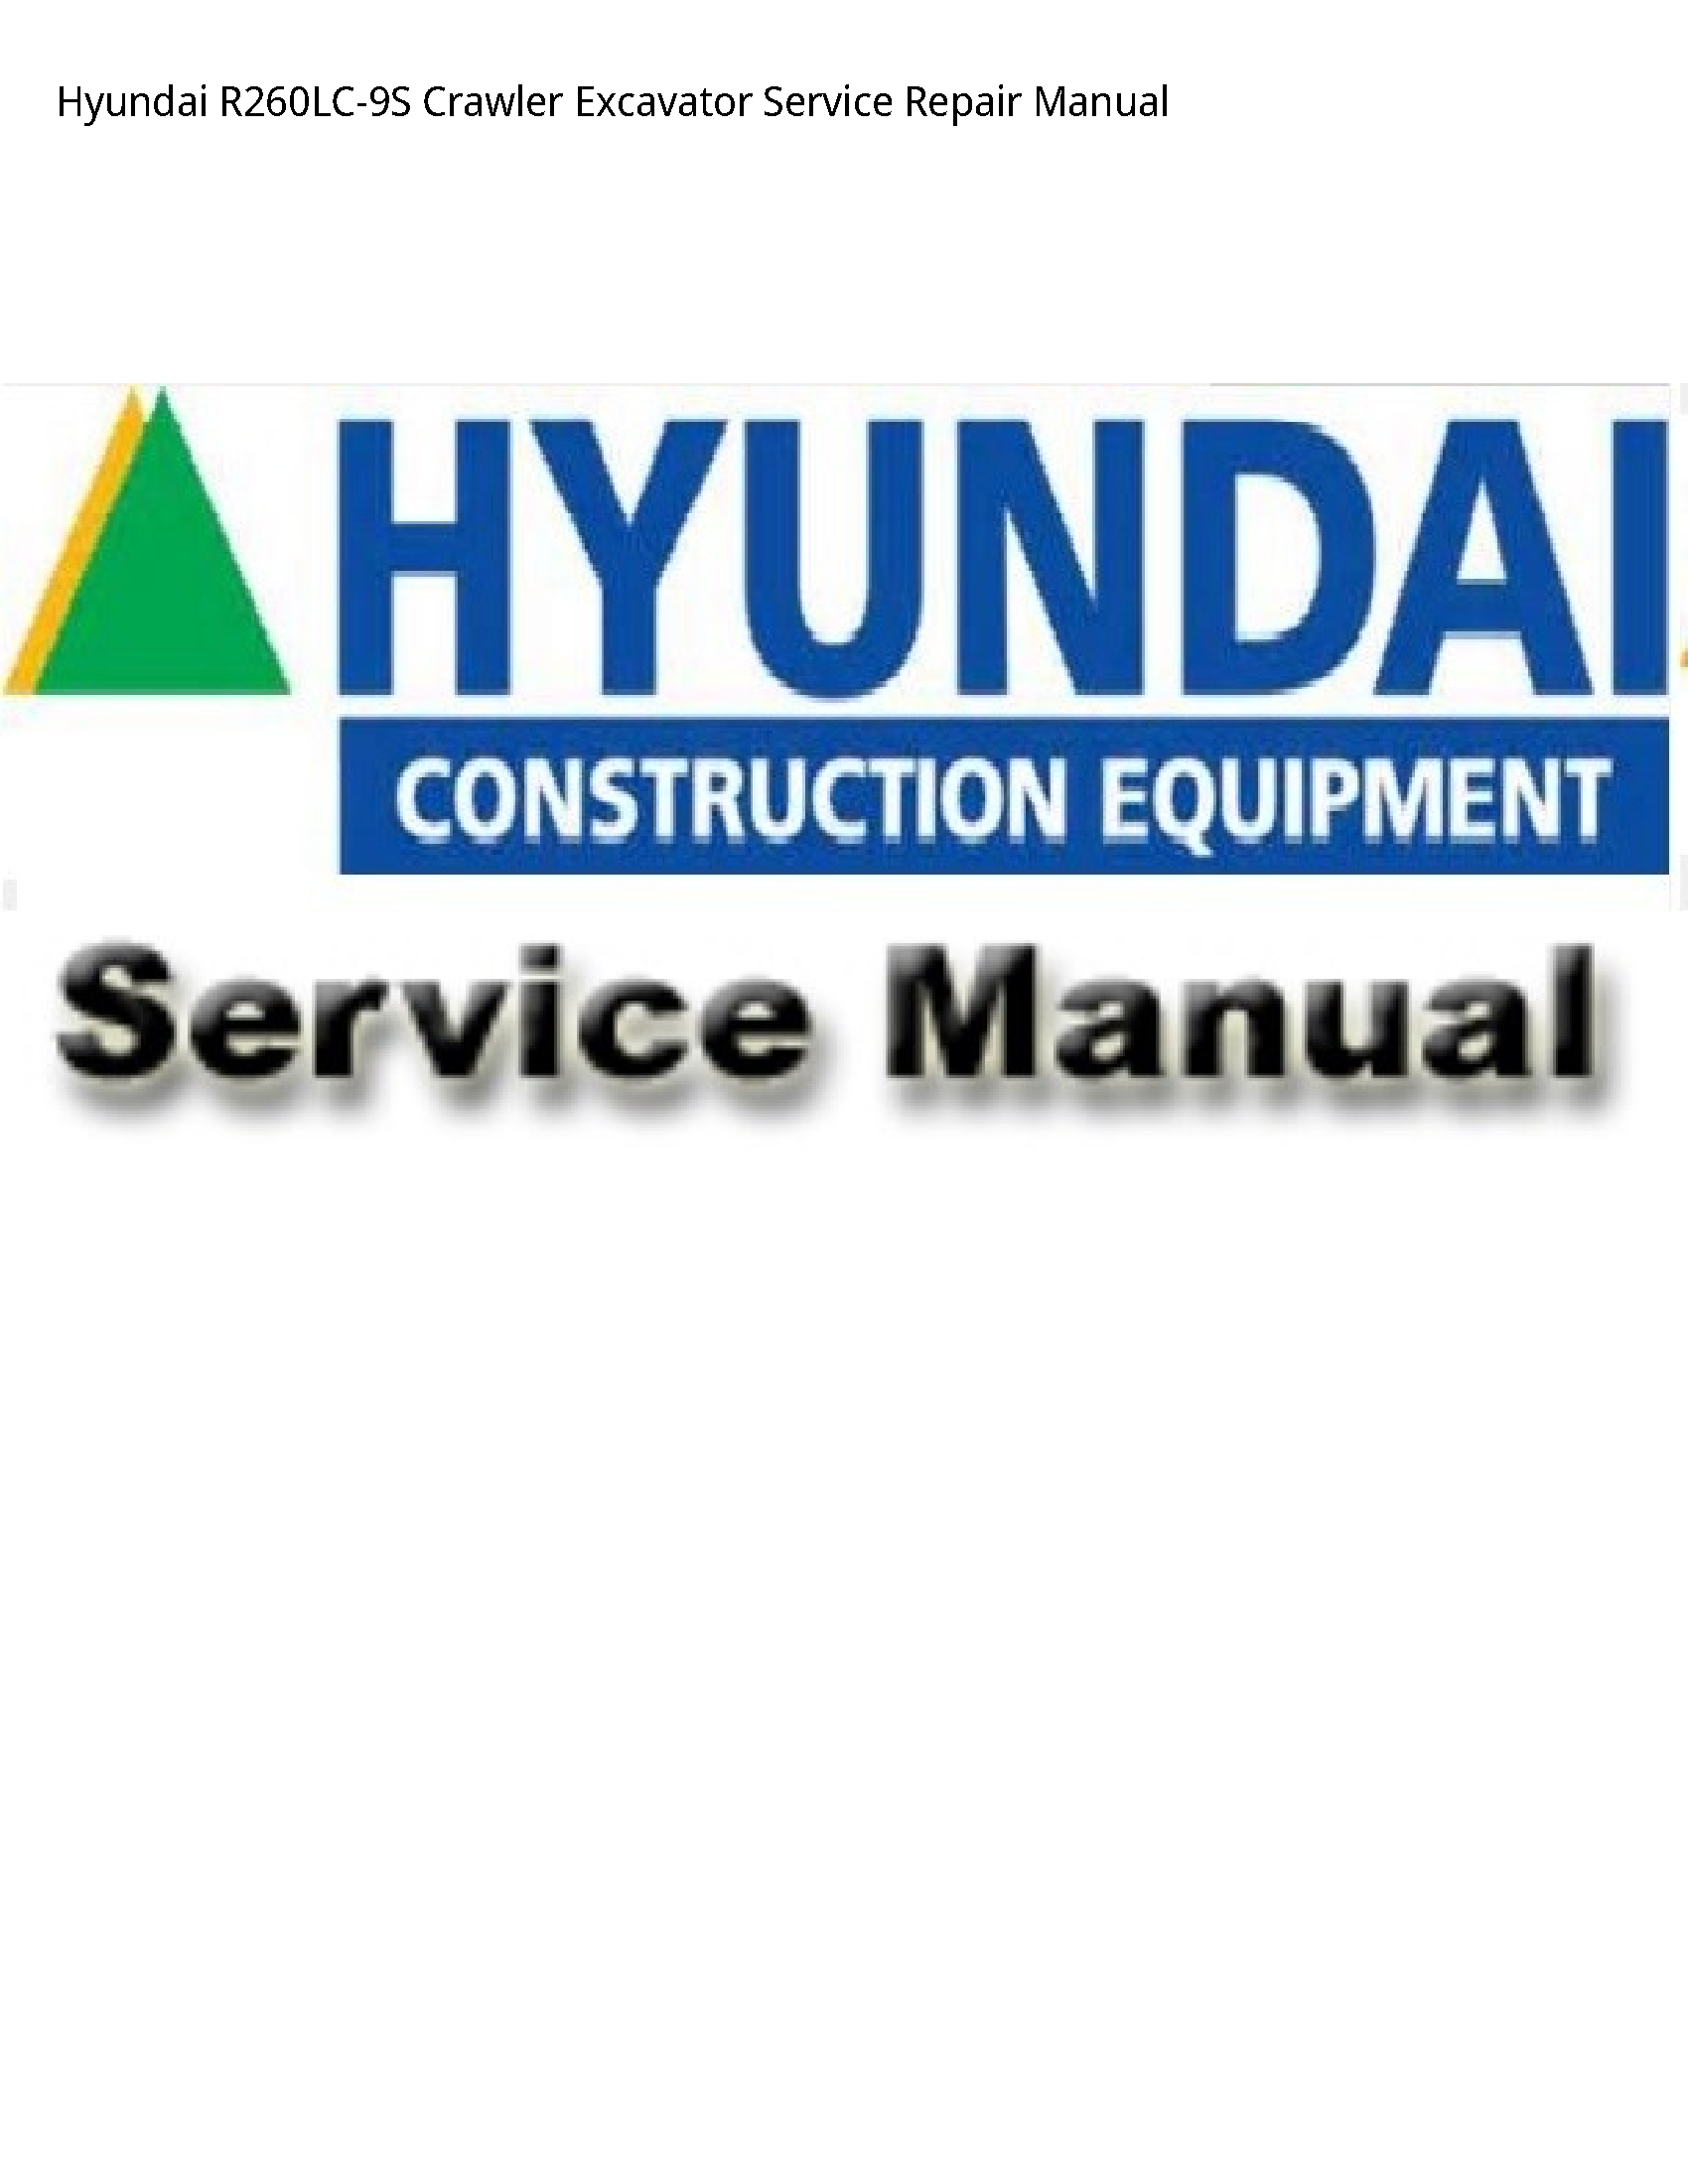 Hyundai R260LC-9S Crawler Excavator manual